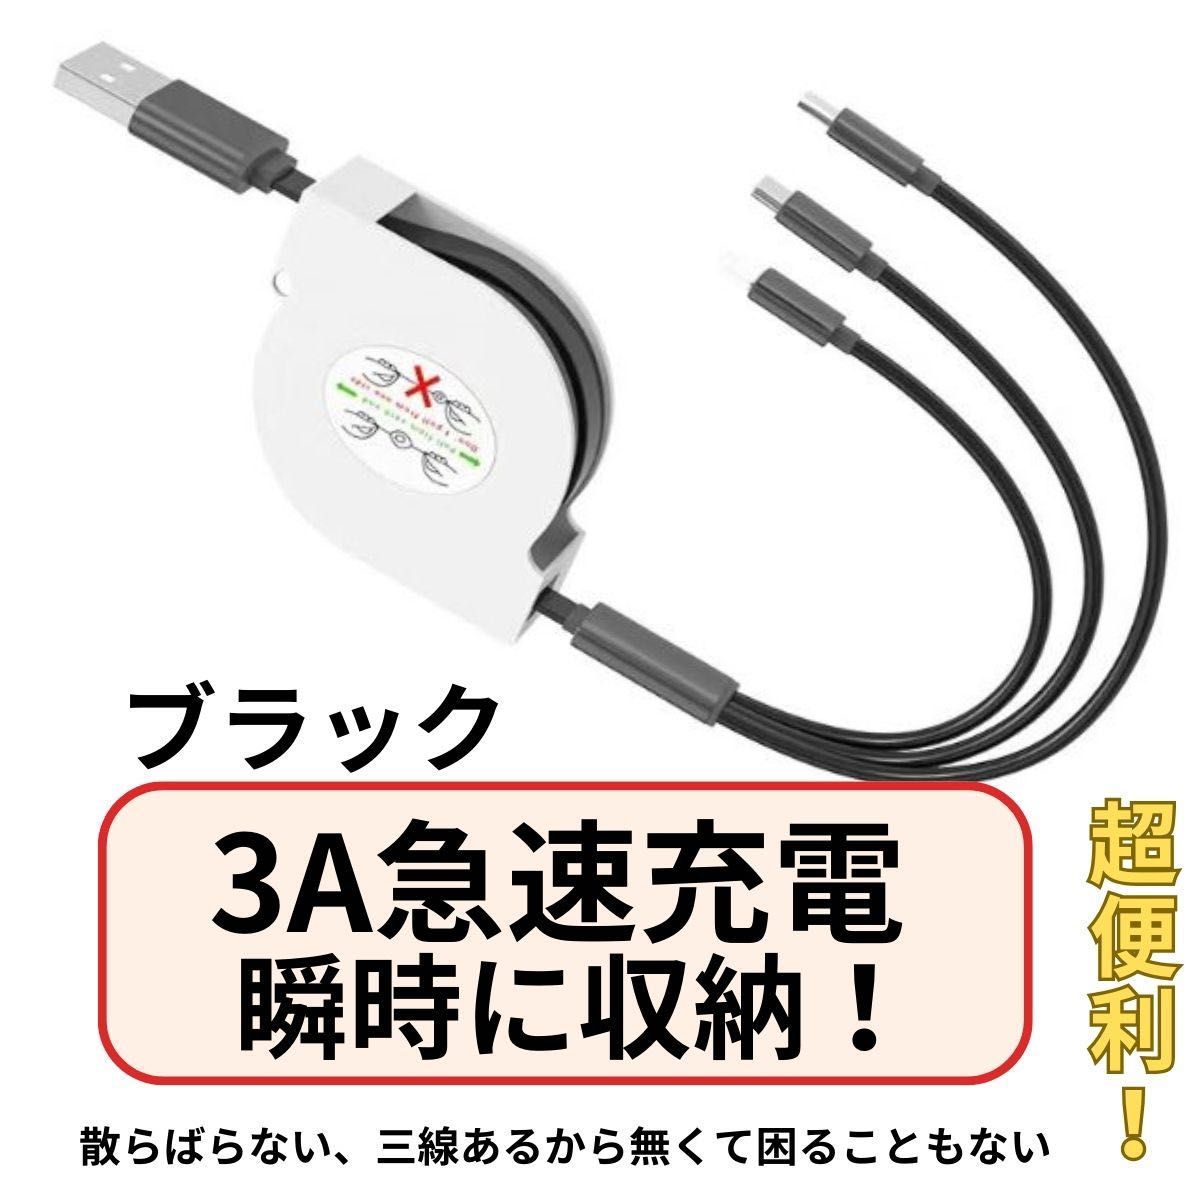 3in 1充電ケーブル 3A急速巻き取り式 USB充電ケーブルiPhone USB,Lightning,Type-C 同時接続。